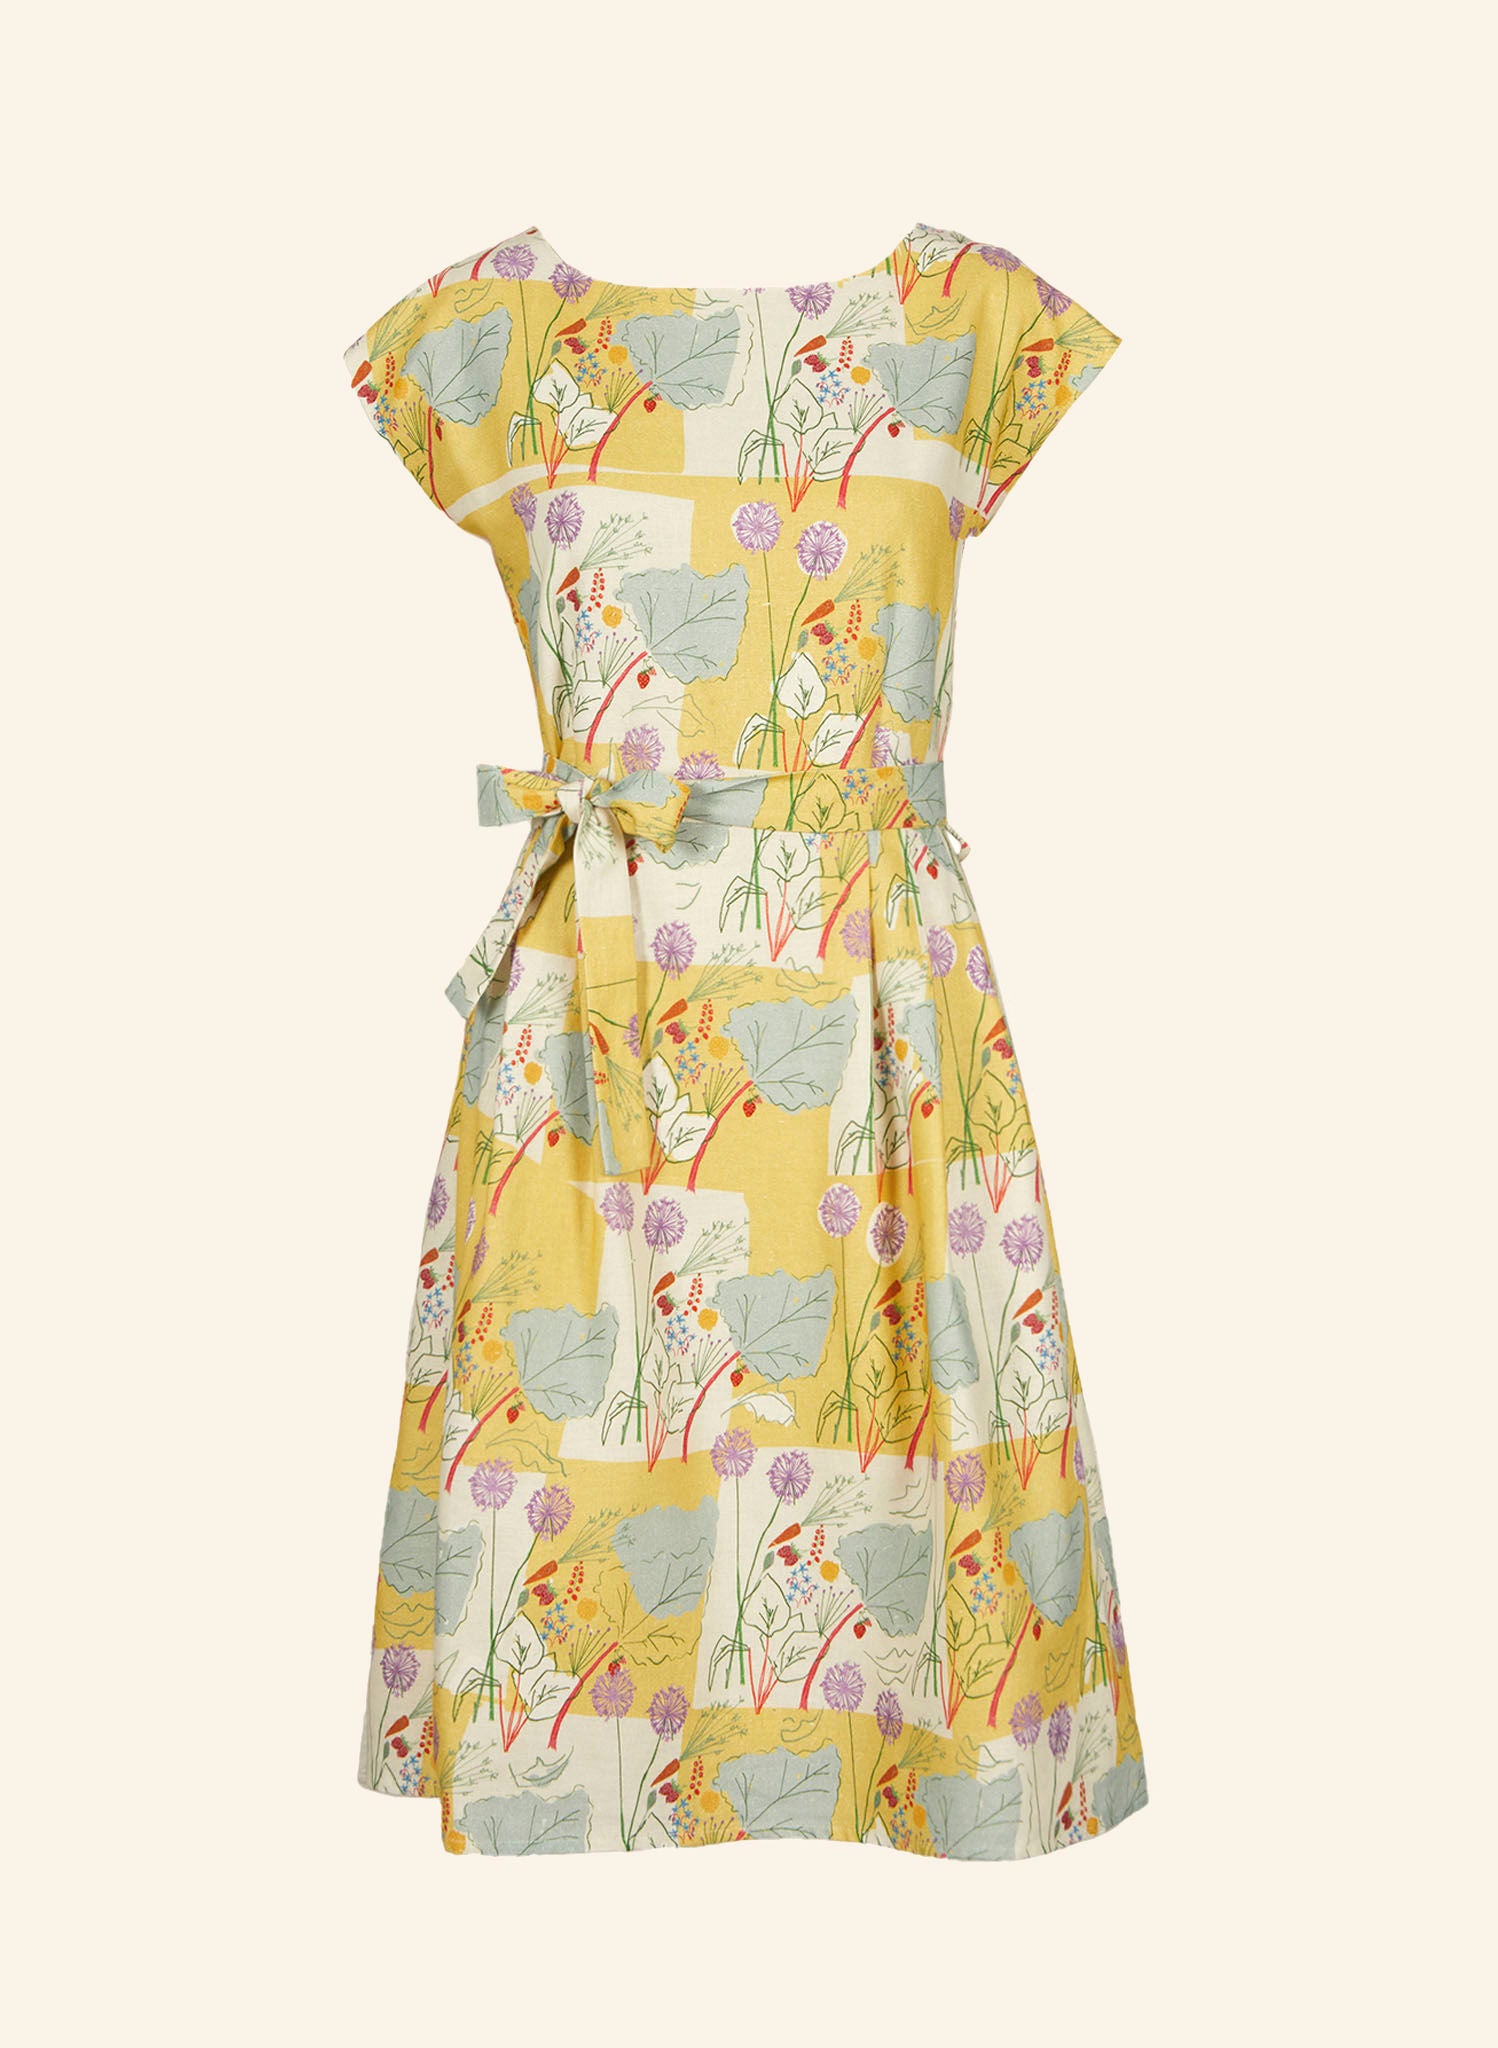 Beatrice Cap - Rhubarb and Custard Dress